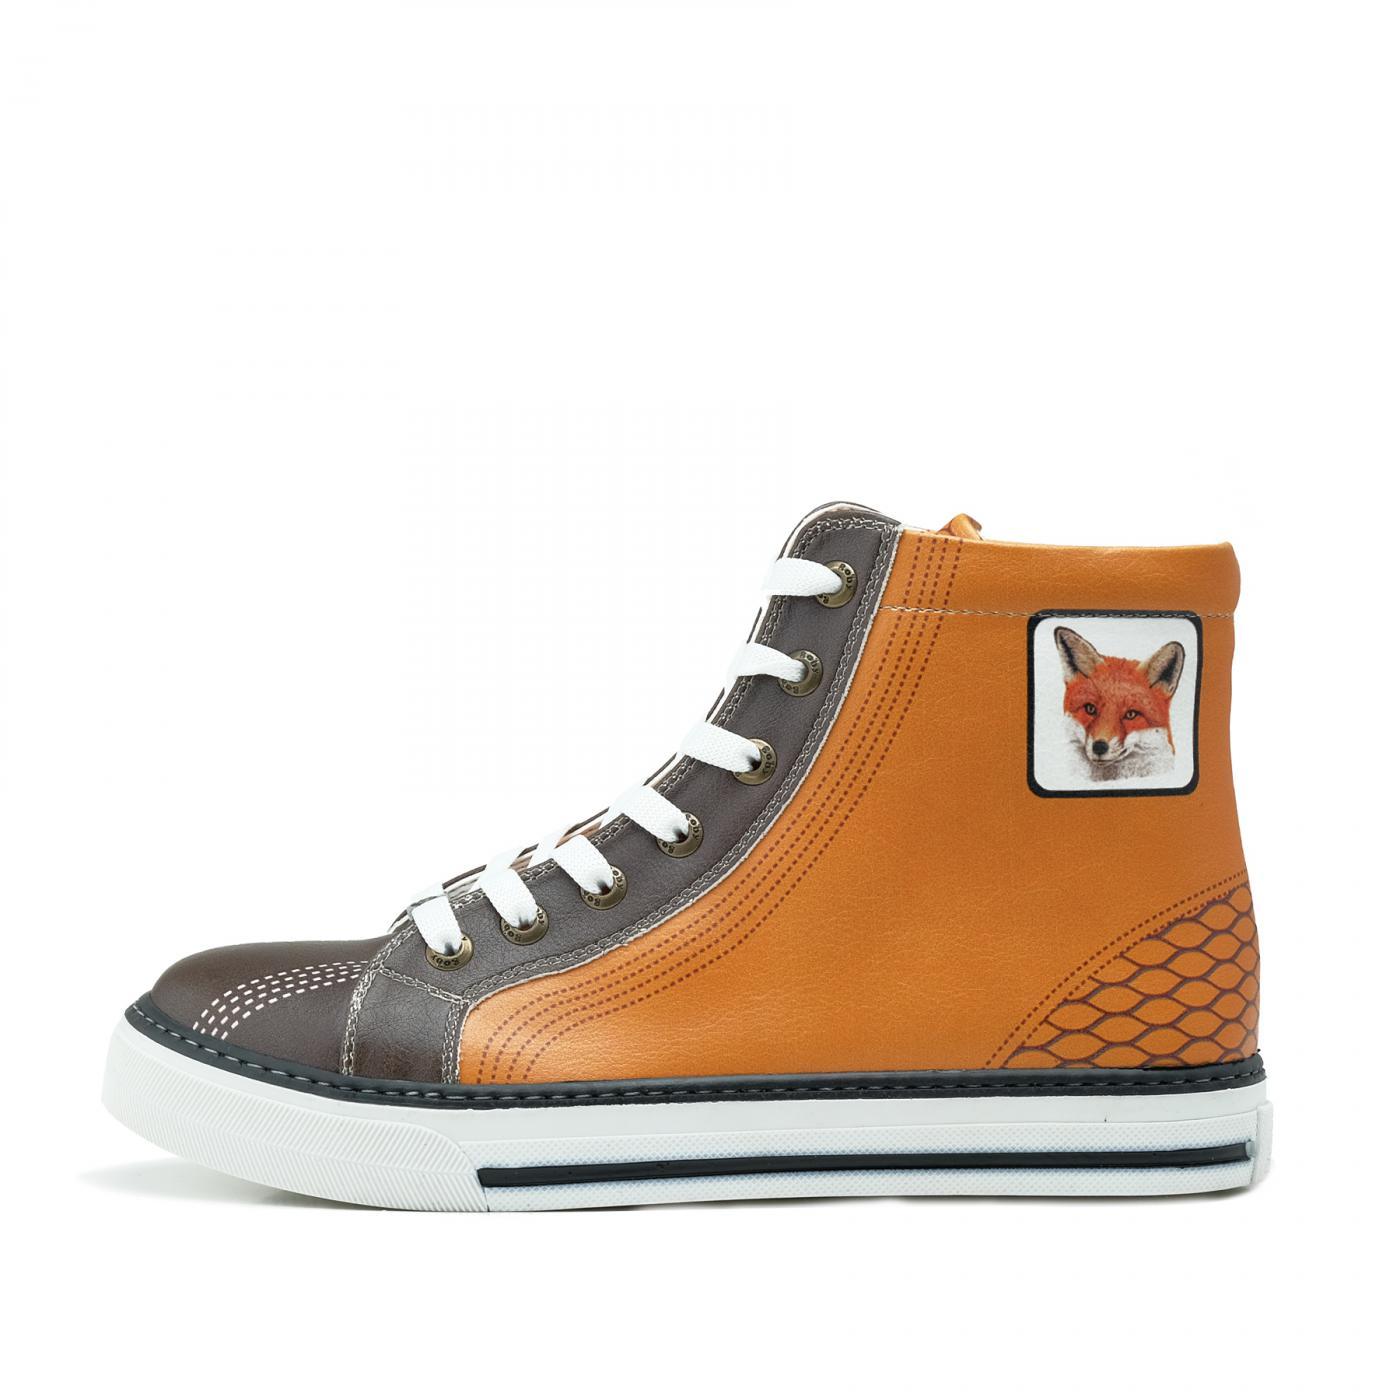 Sneaker Boots WCV5017